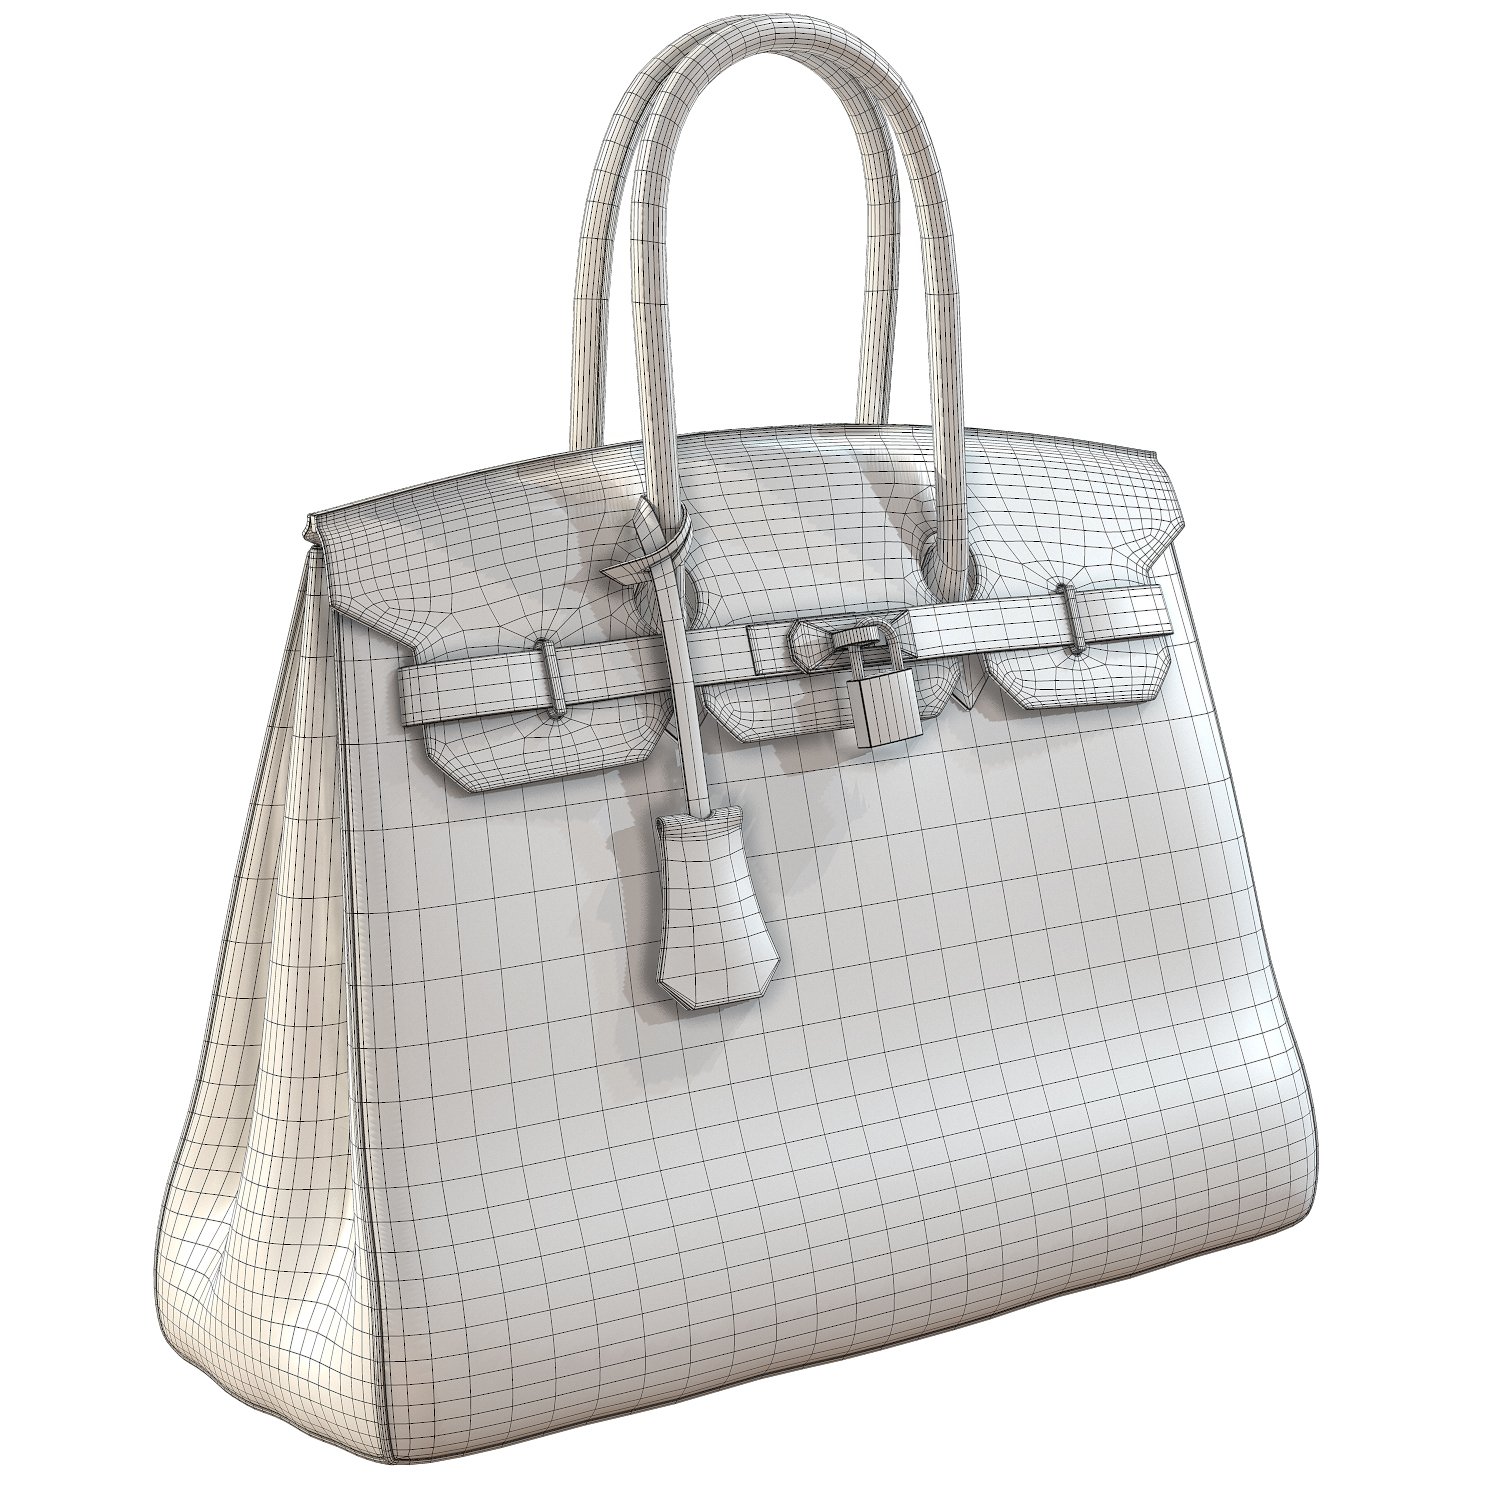 Hermes Birkin Bag Yellow Leather | 3D model